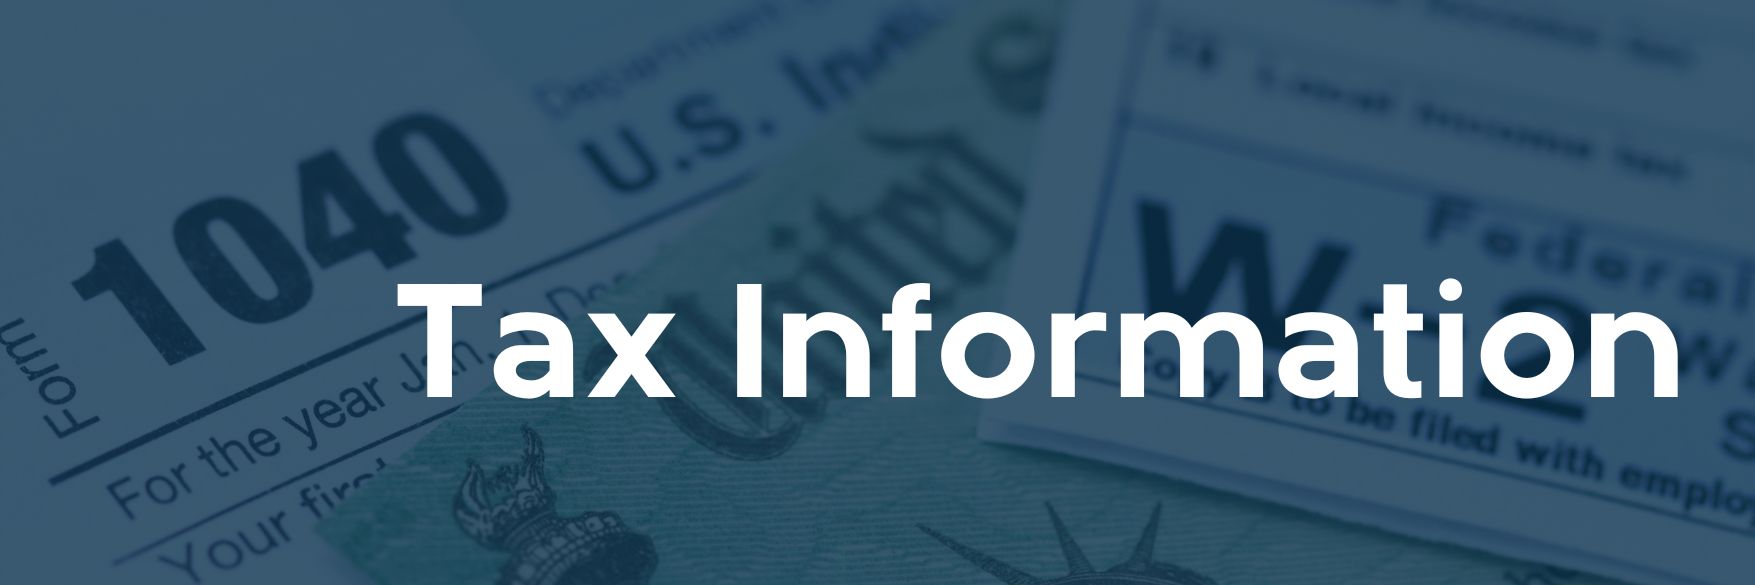 Tax Information Header Image